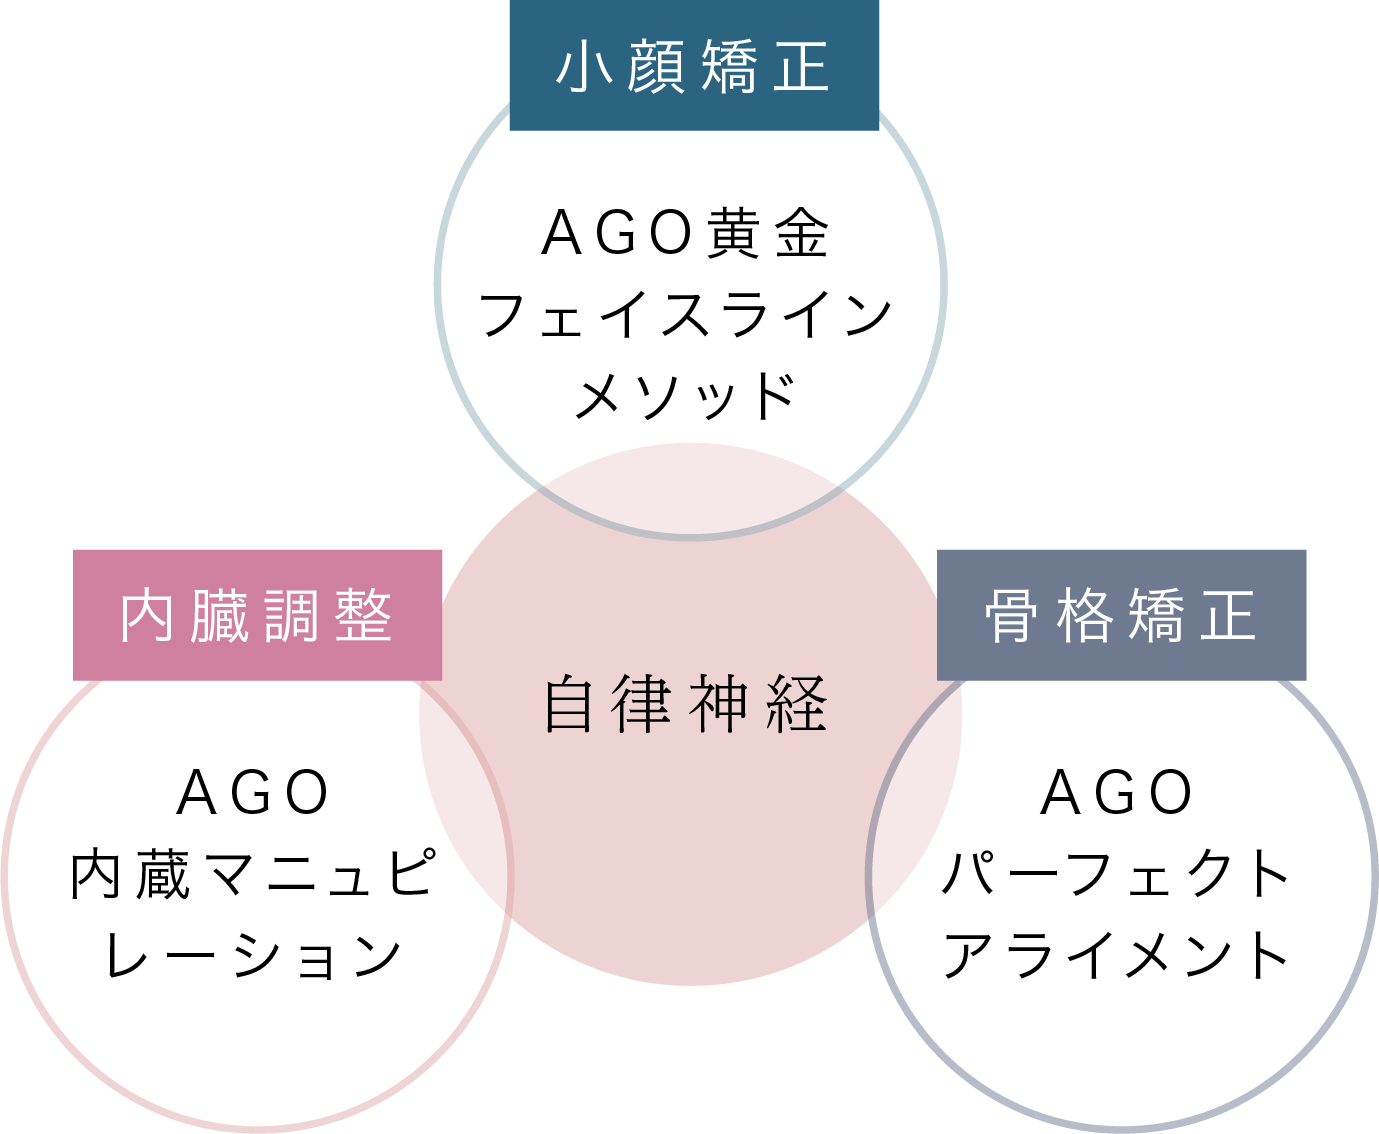 AGOメソッドは3つの技術の集合体